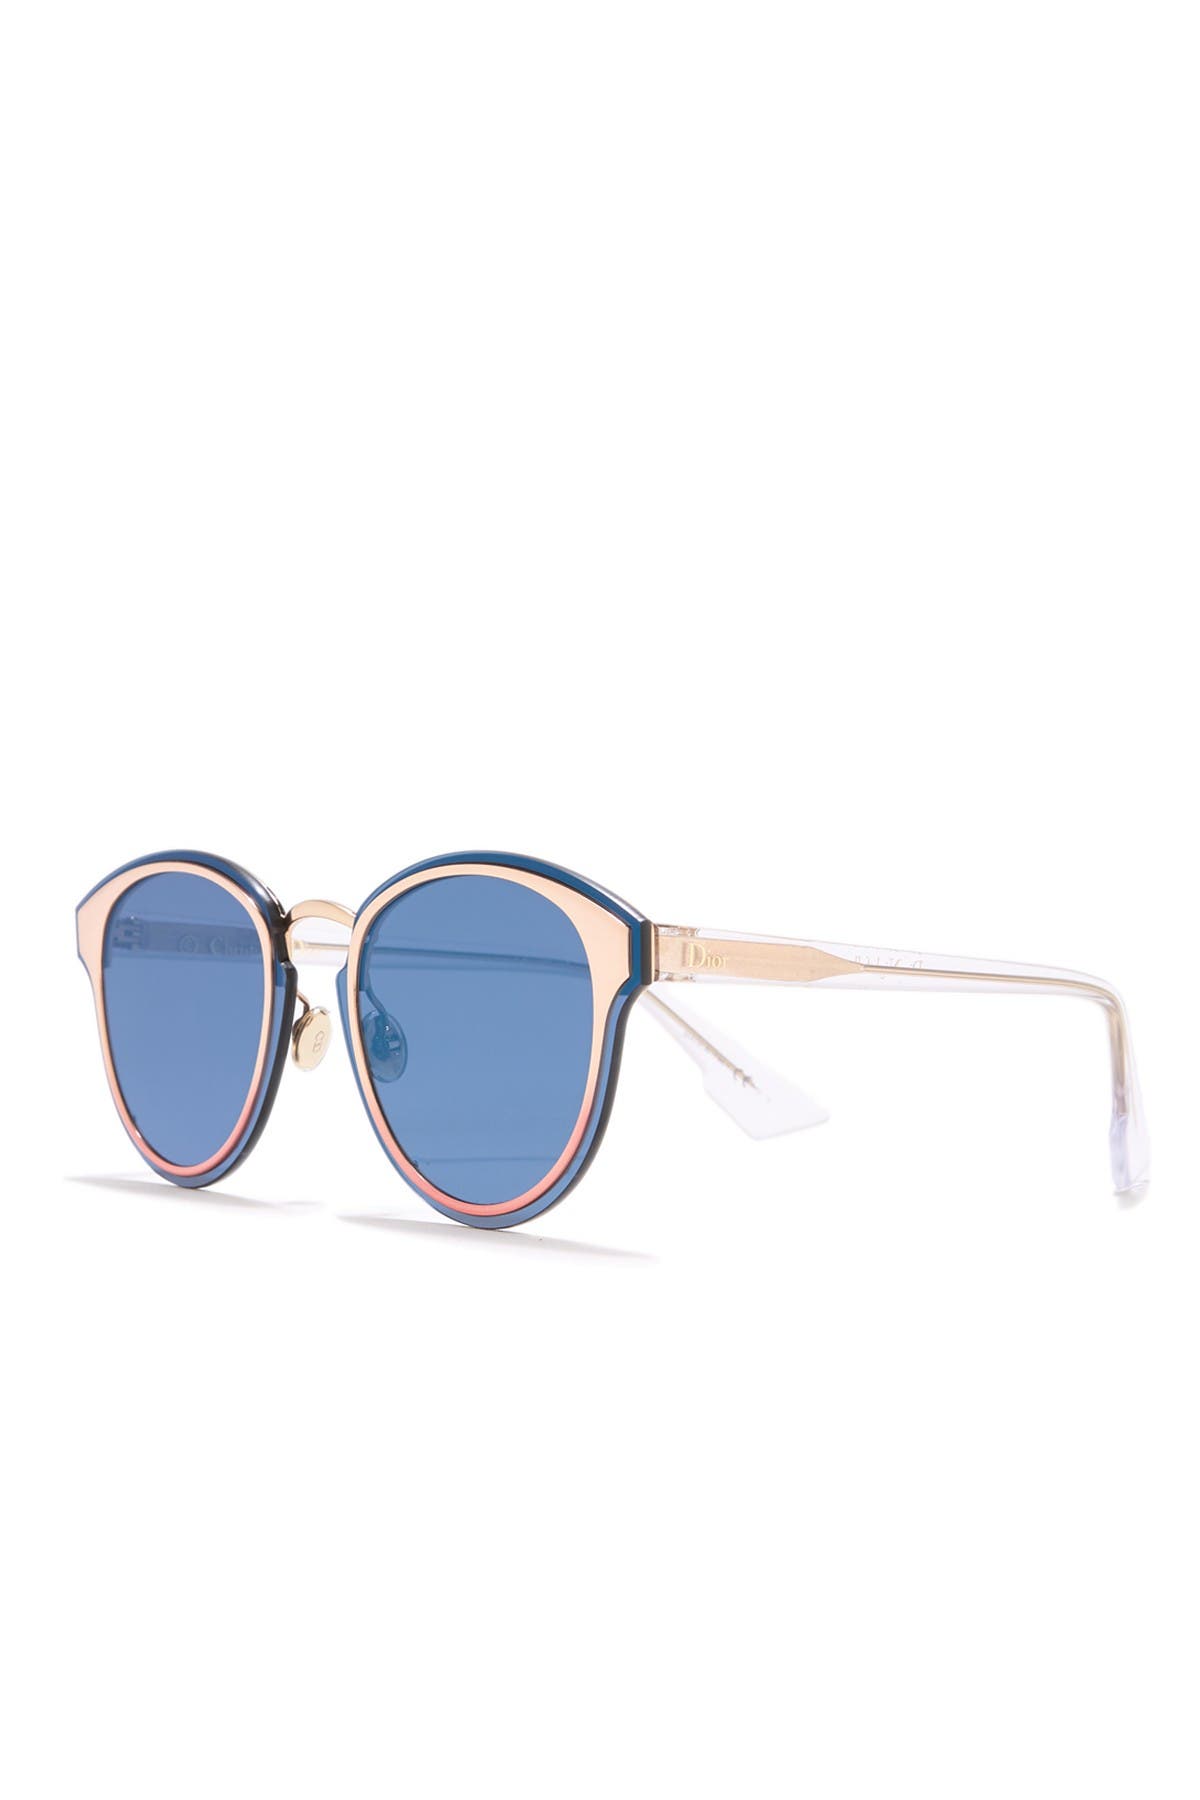 Dior | Nightfall 65mm Round Sunglasses 